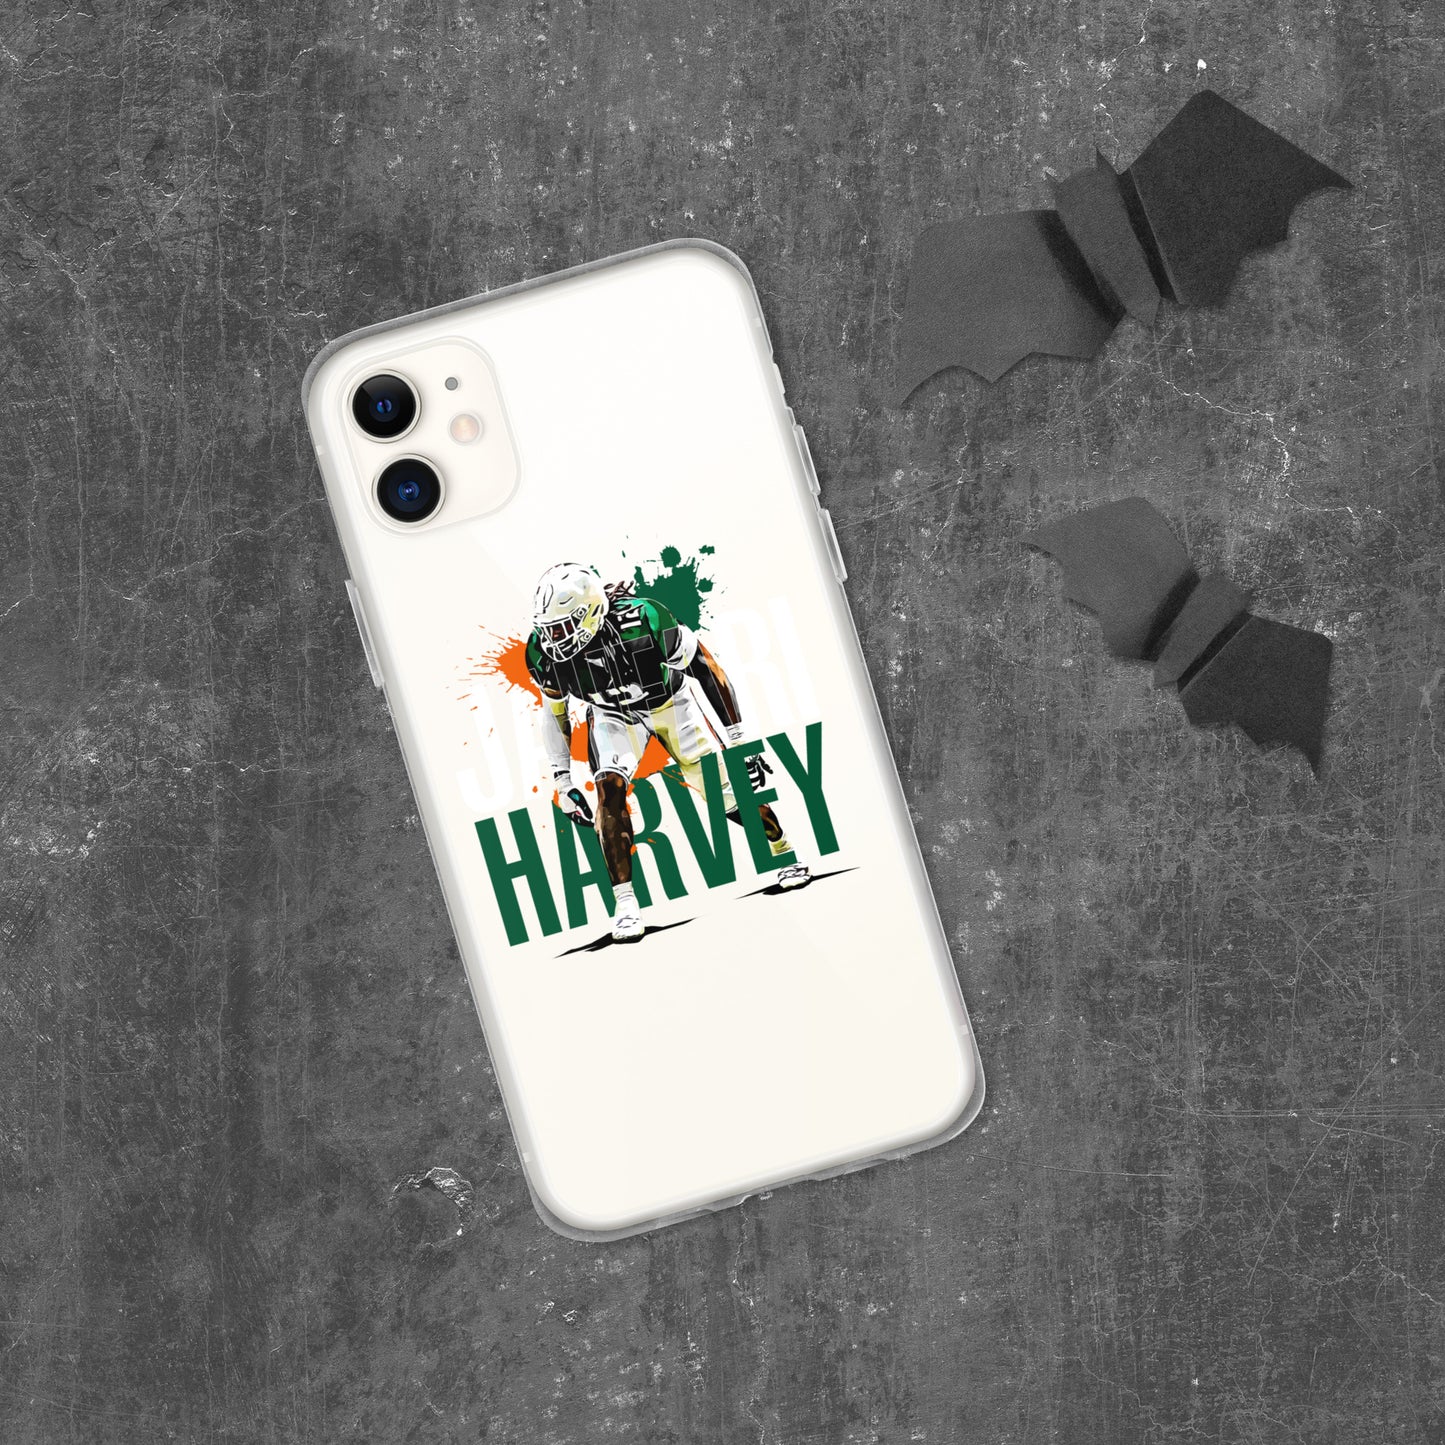 Jahfari Harvey "Stay Ready" iPhone Case